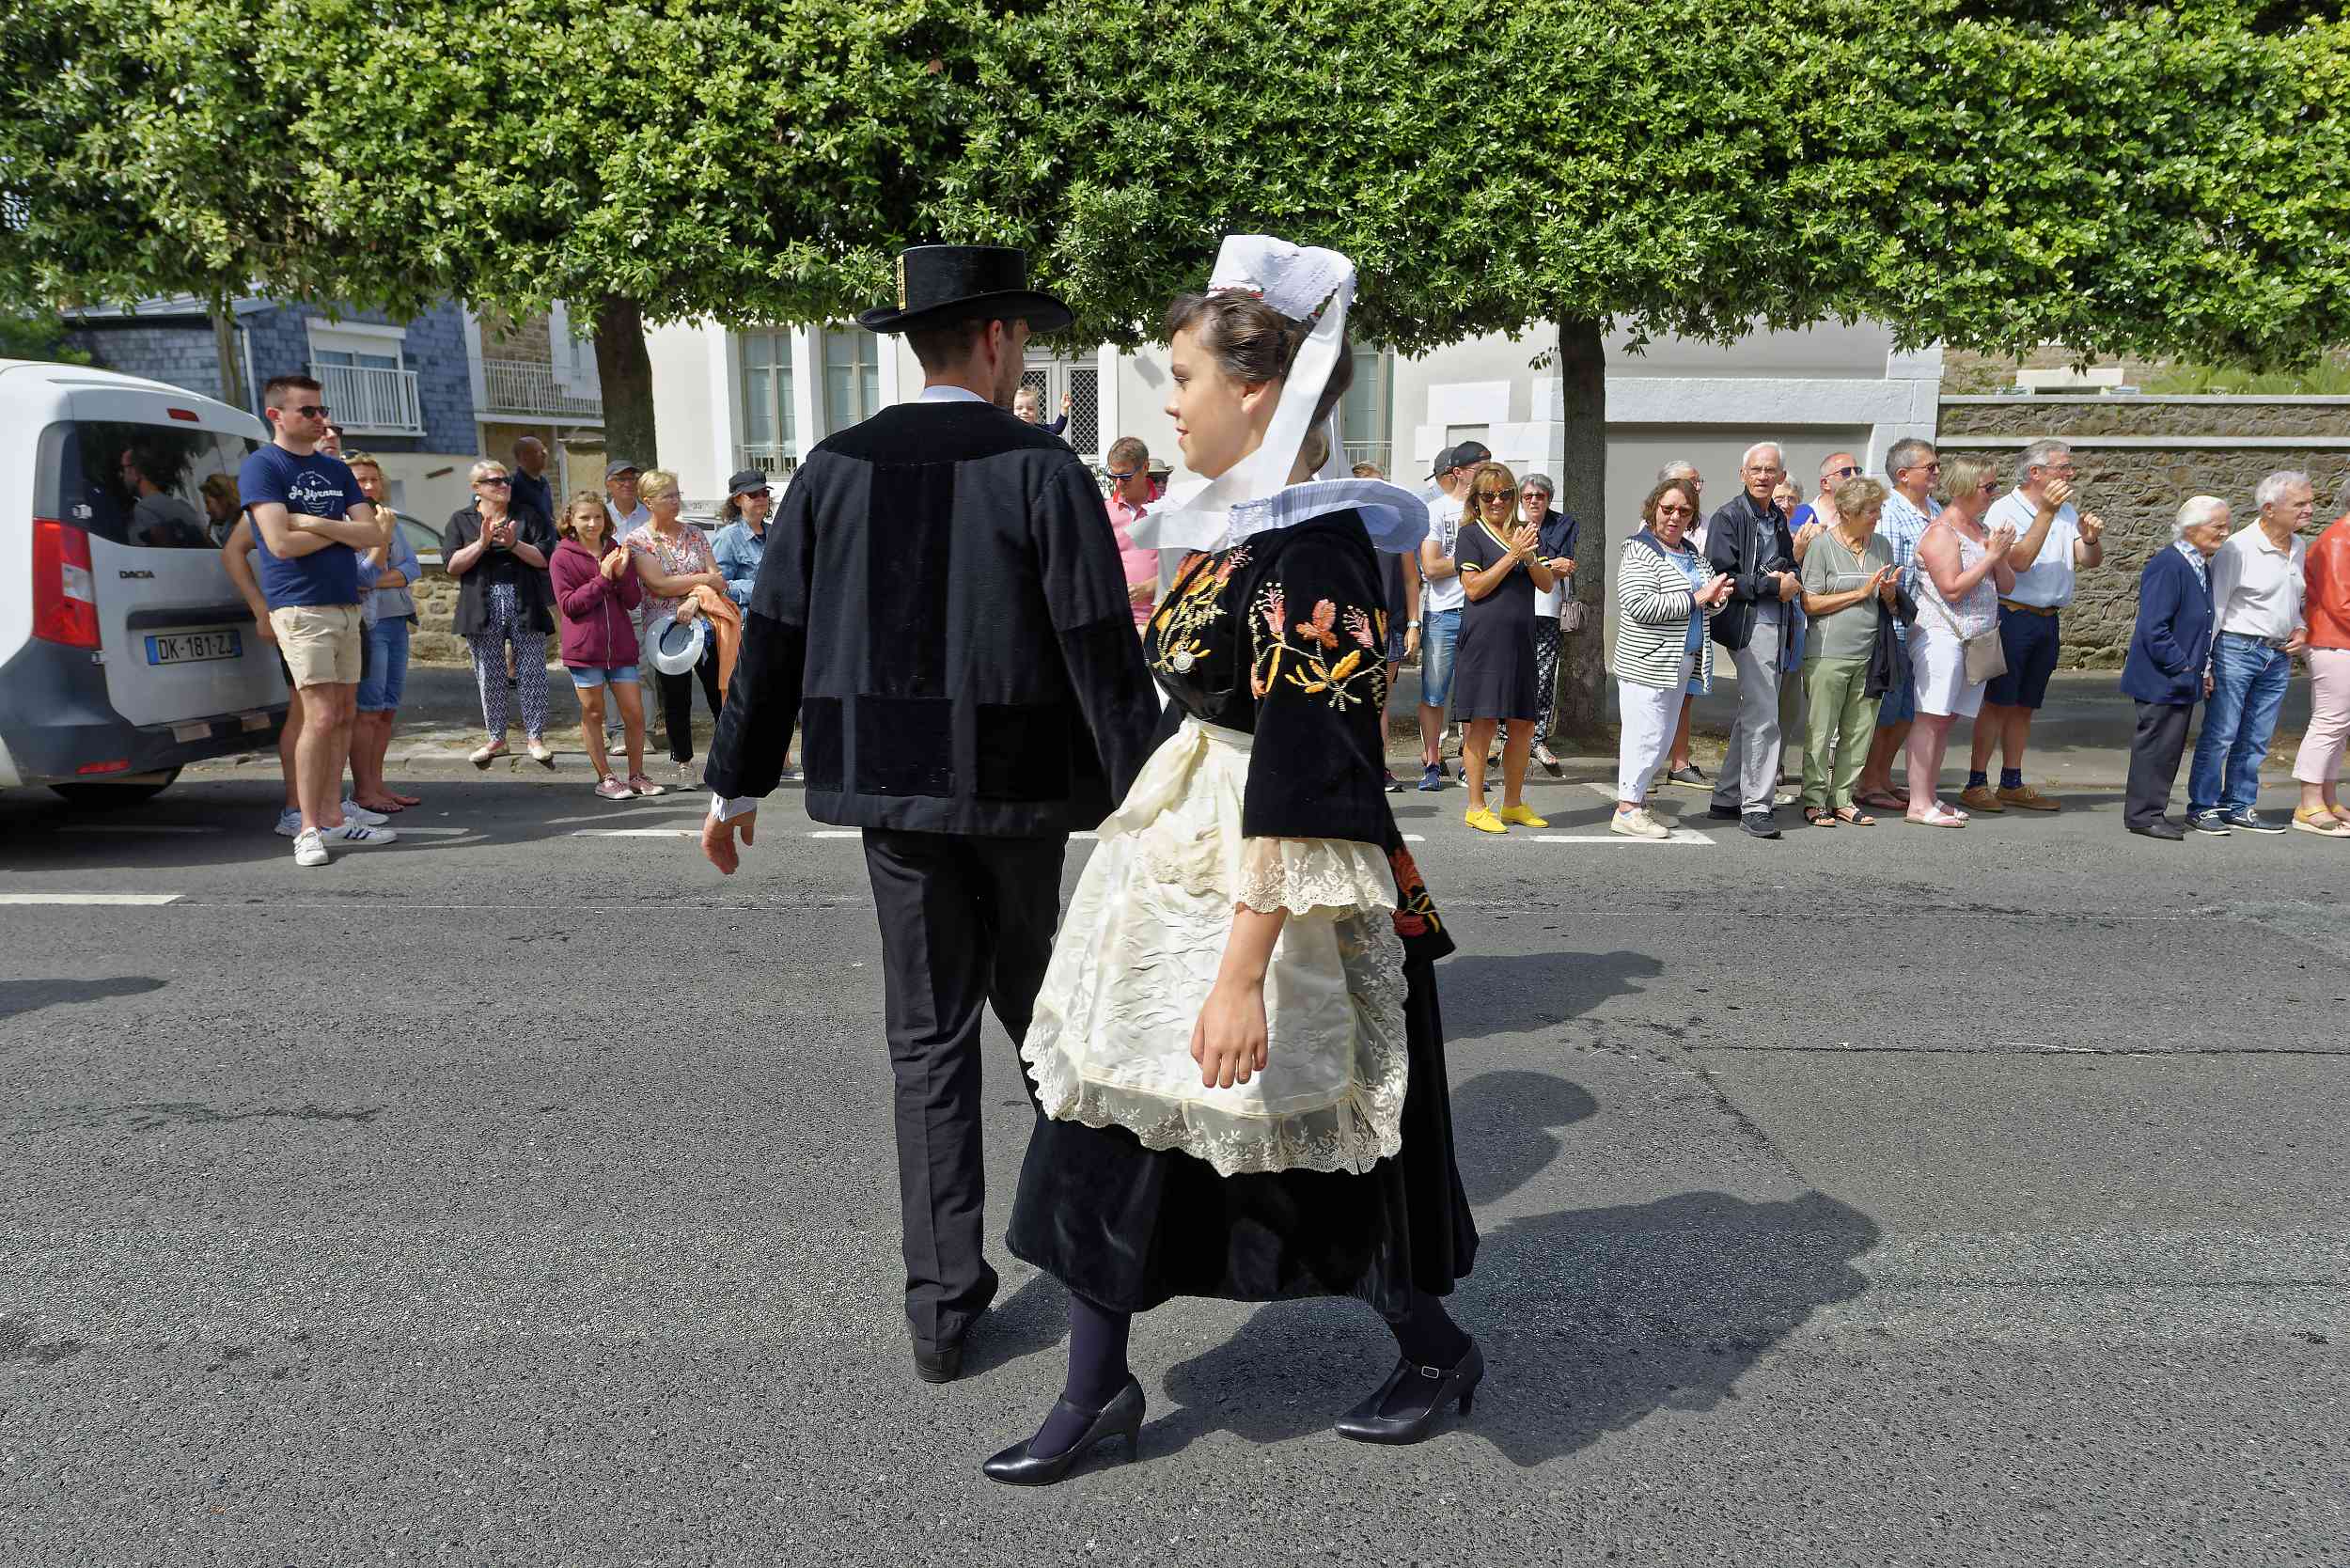 Folklores du monde 2019 Saint-Malo photo-13685